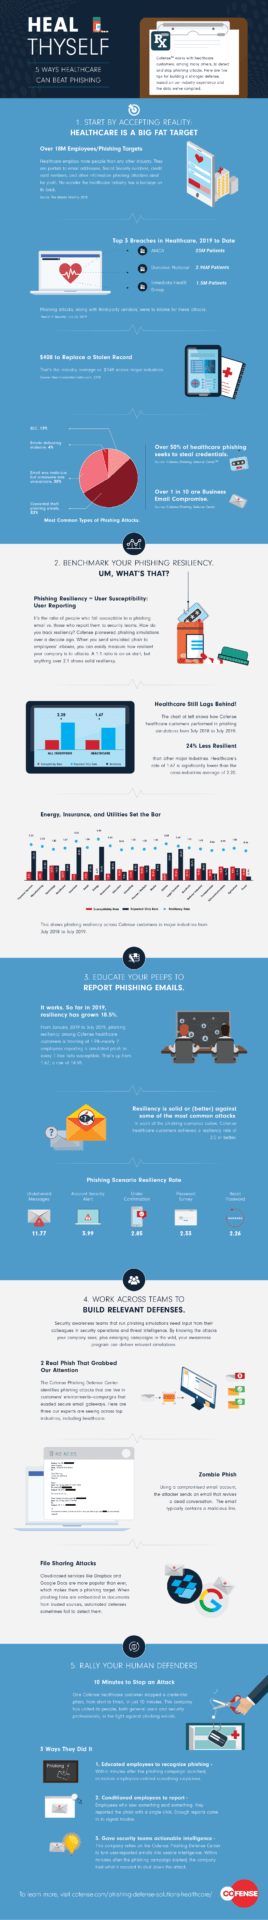 Cofense Healthcare Infographic 2: Statistics on healthcare phishing attacks